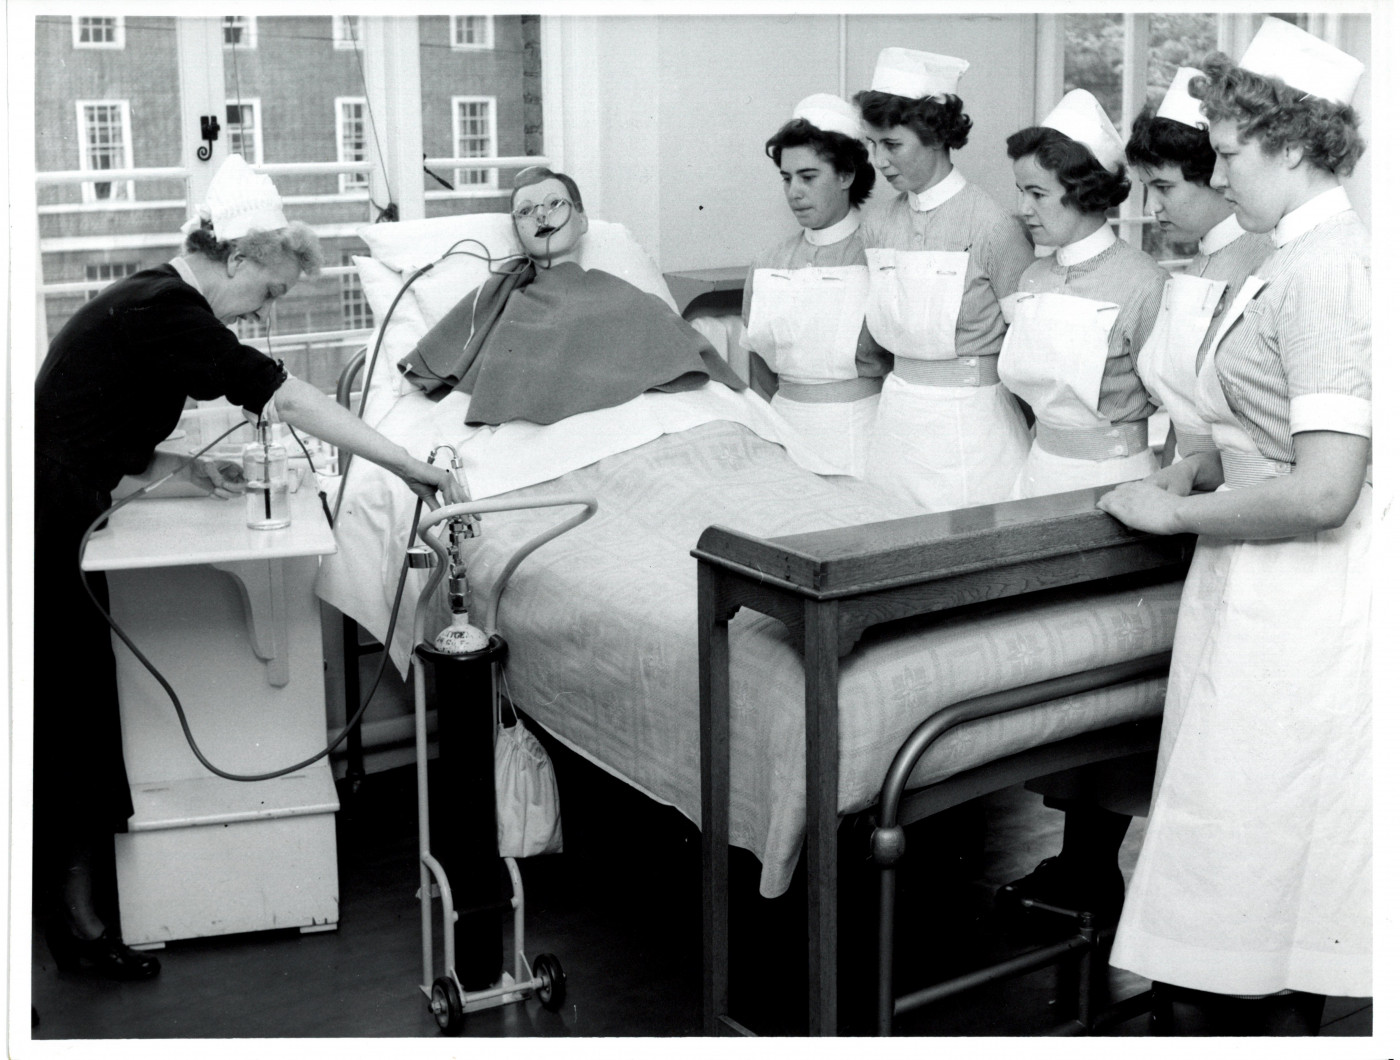 Picture 22 - Dreadnought nurse training 1960s 